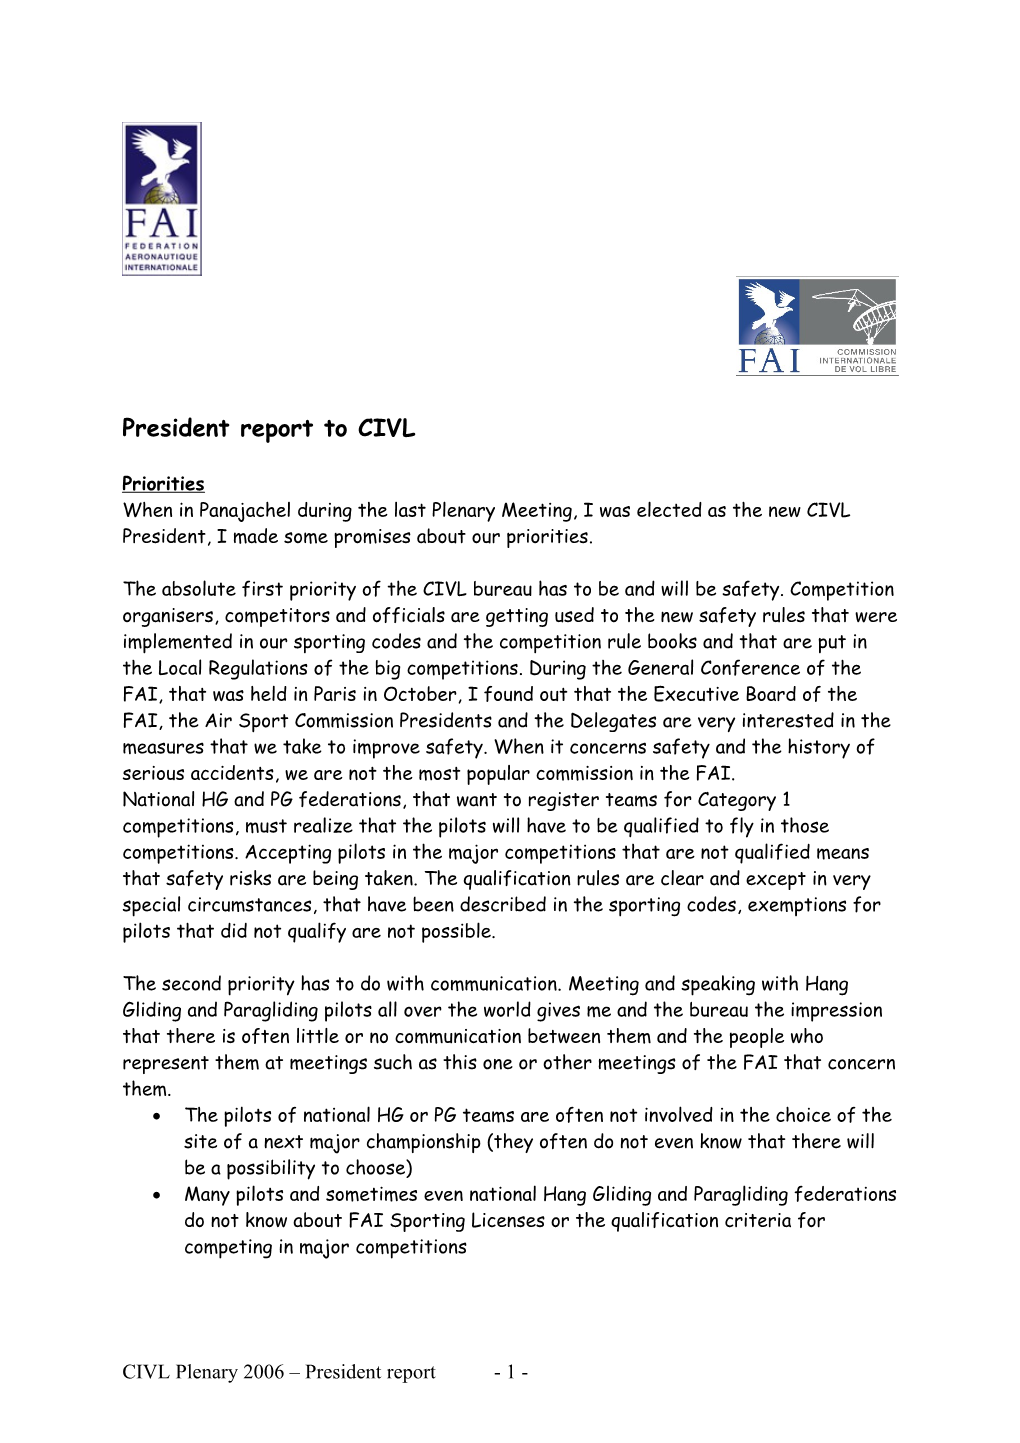 President Report to CIVL